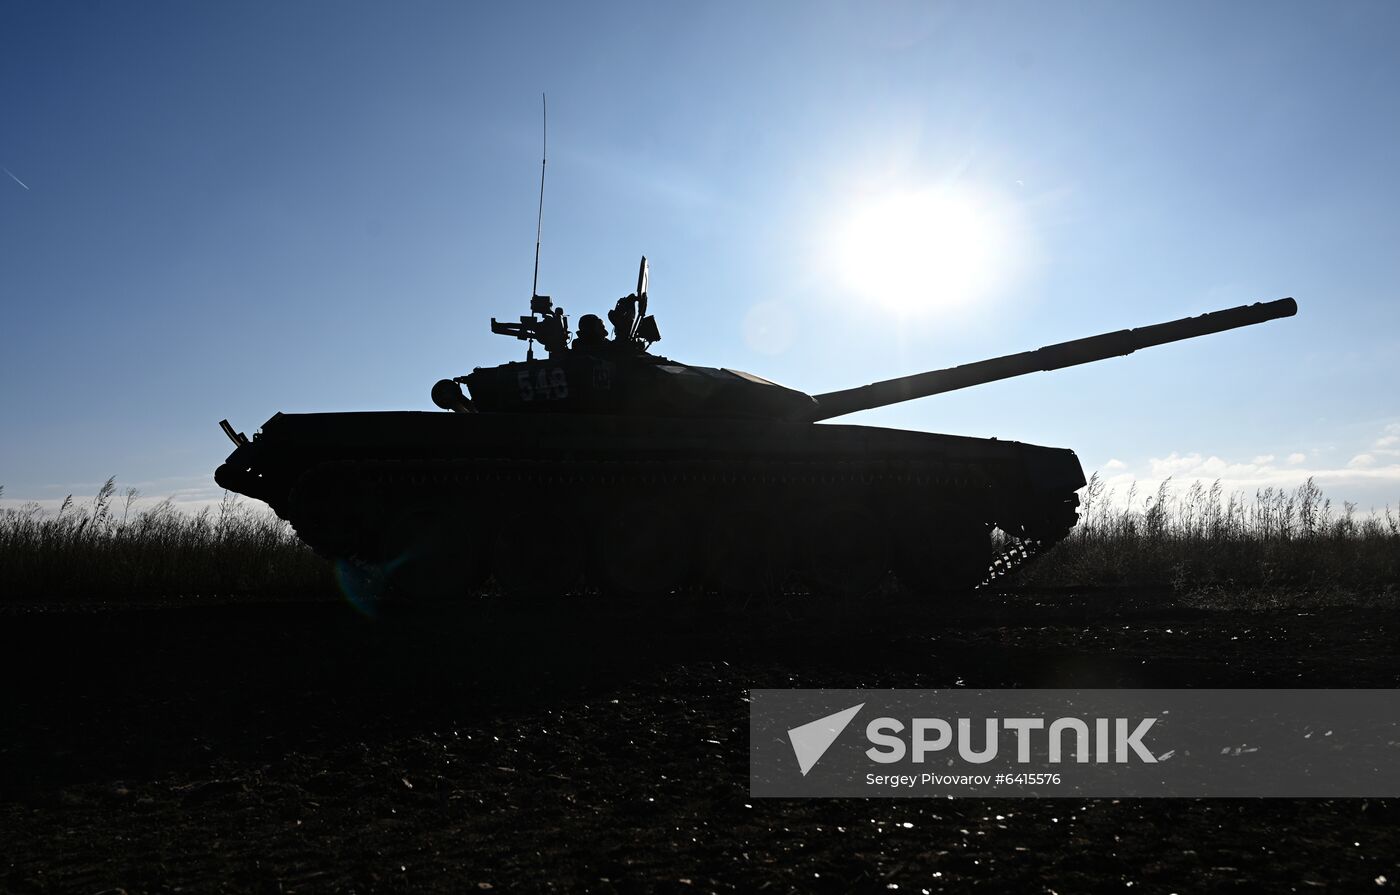 Russia Army Games Tank Biathlon Qualification